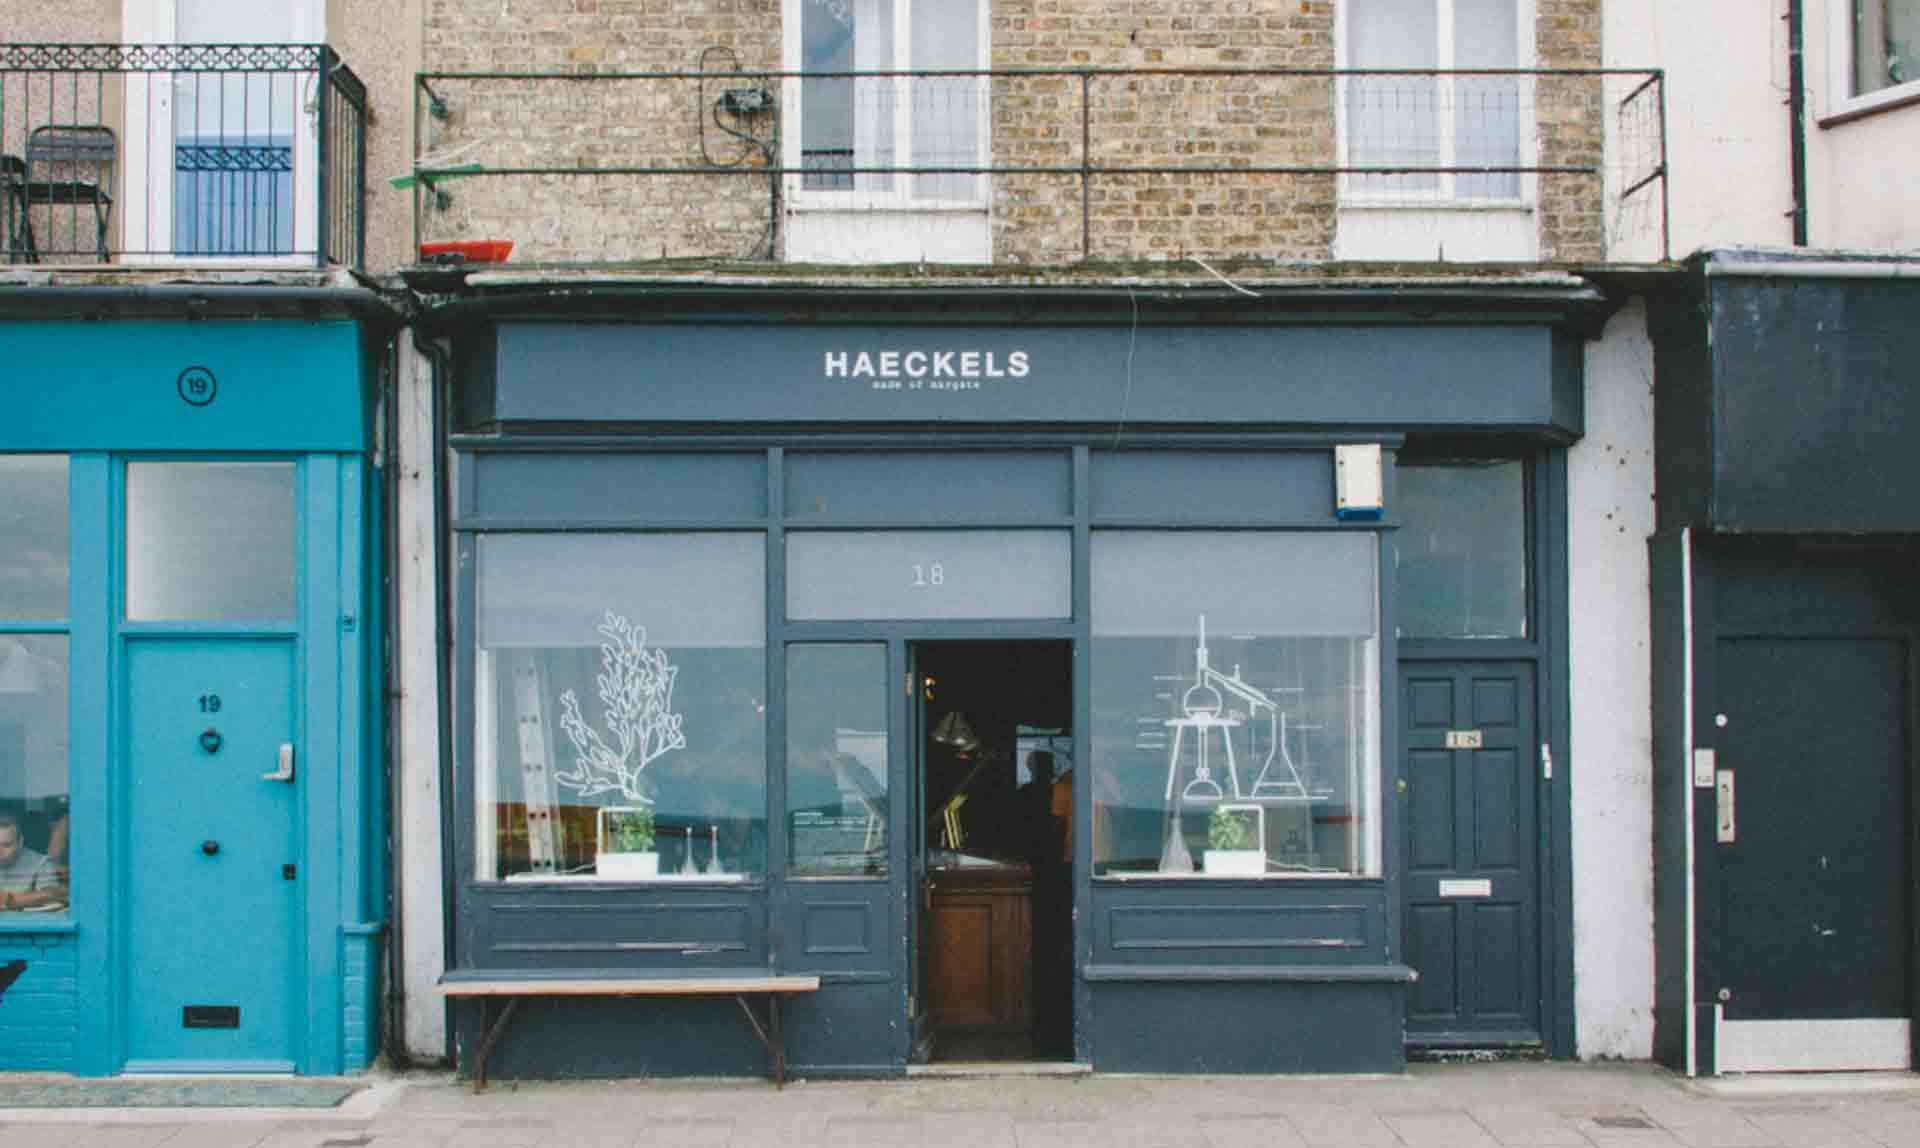 Haeckels natural seaweed beauty products shopfront